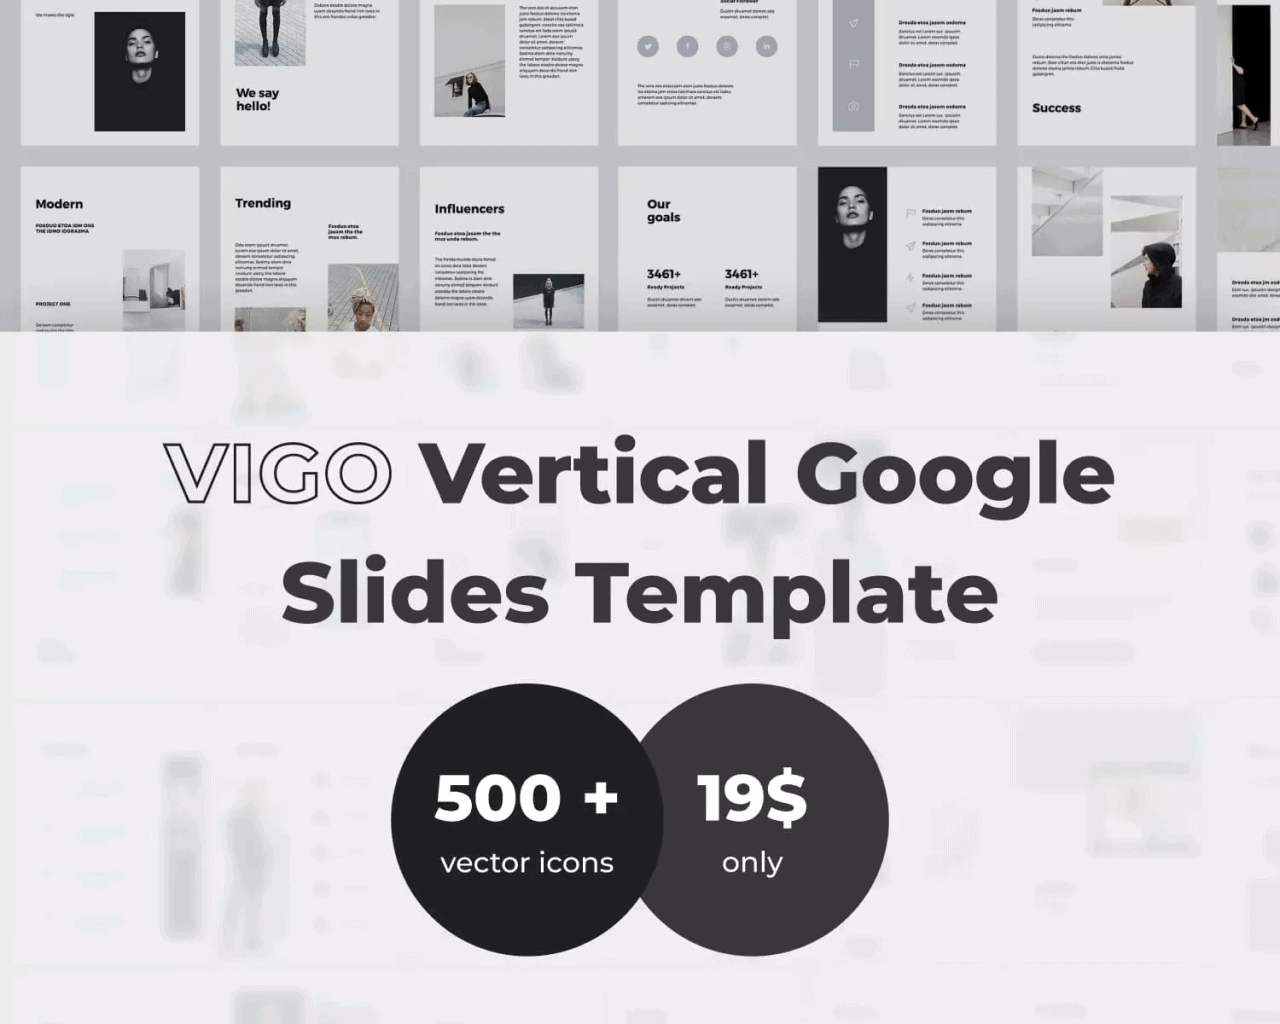 VIGO Vertical Google Slides Template